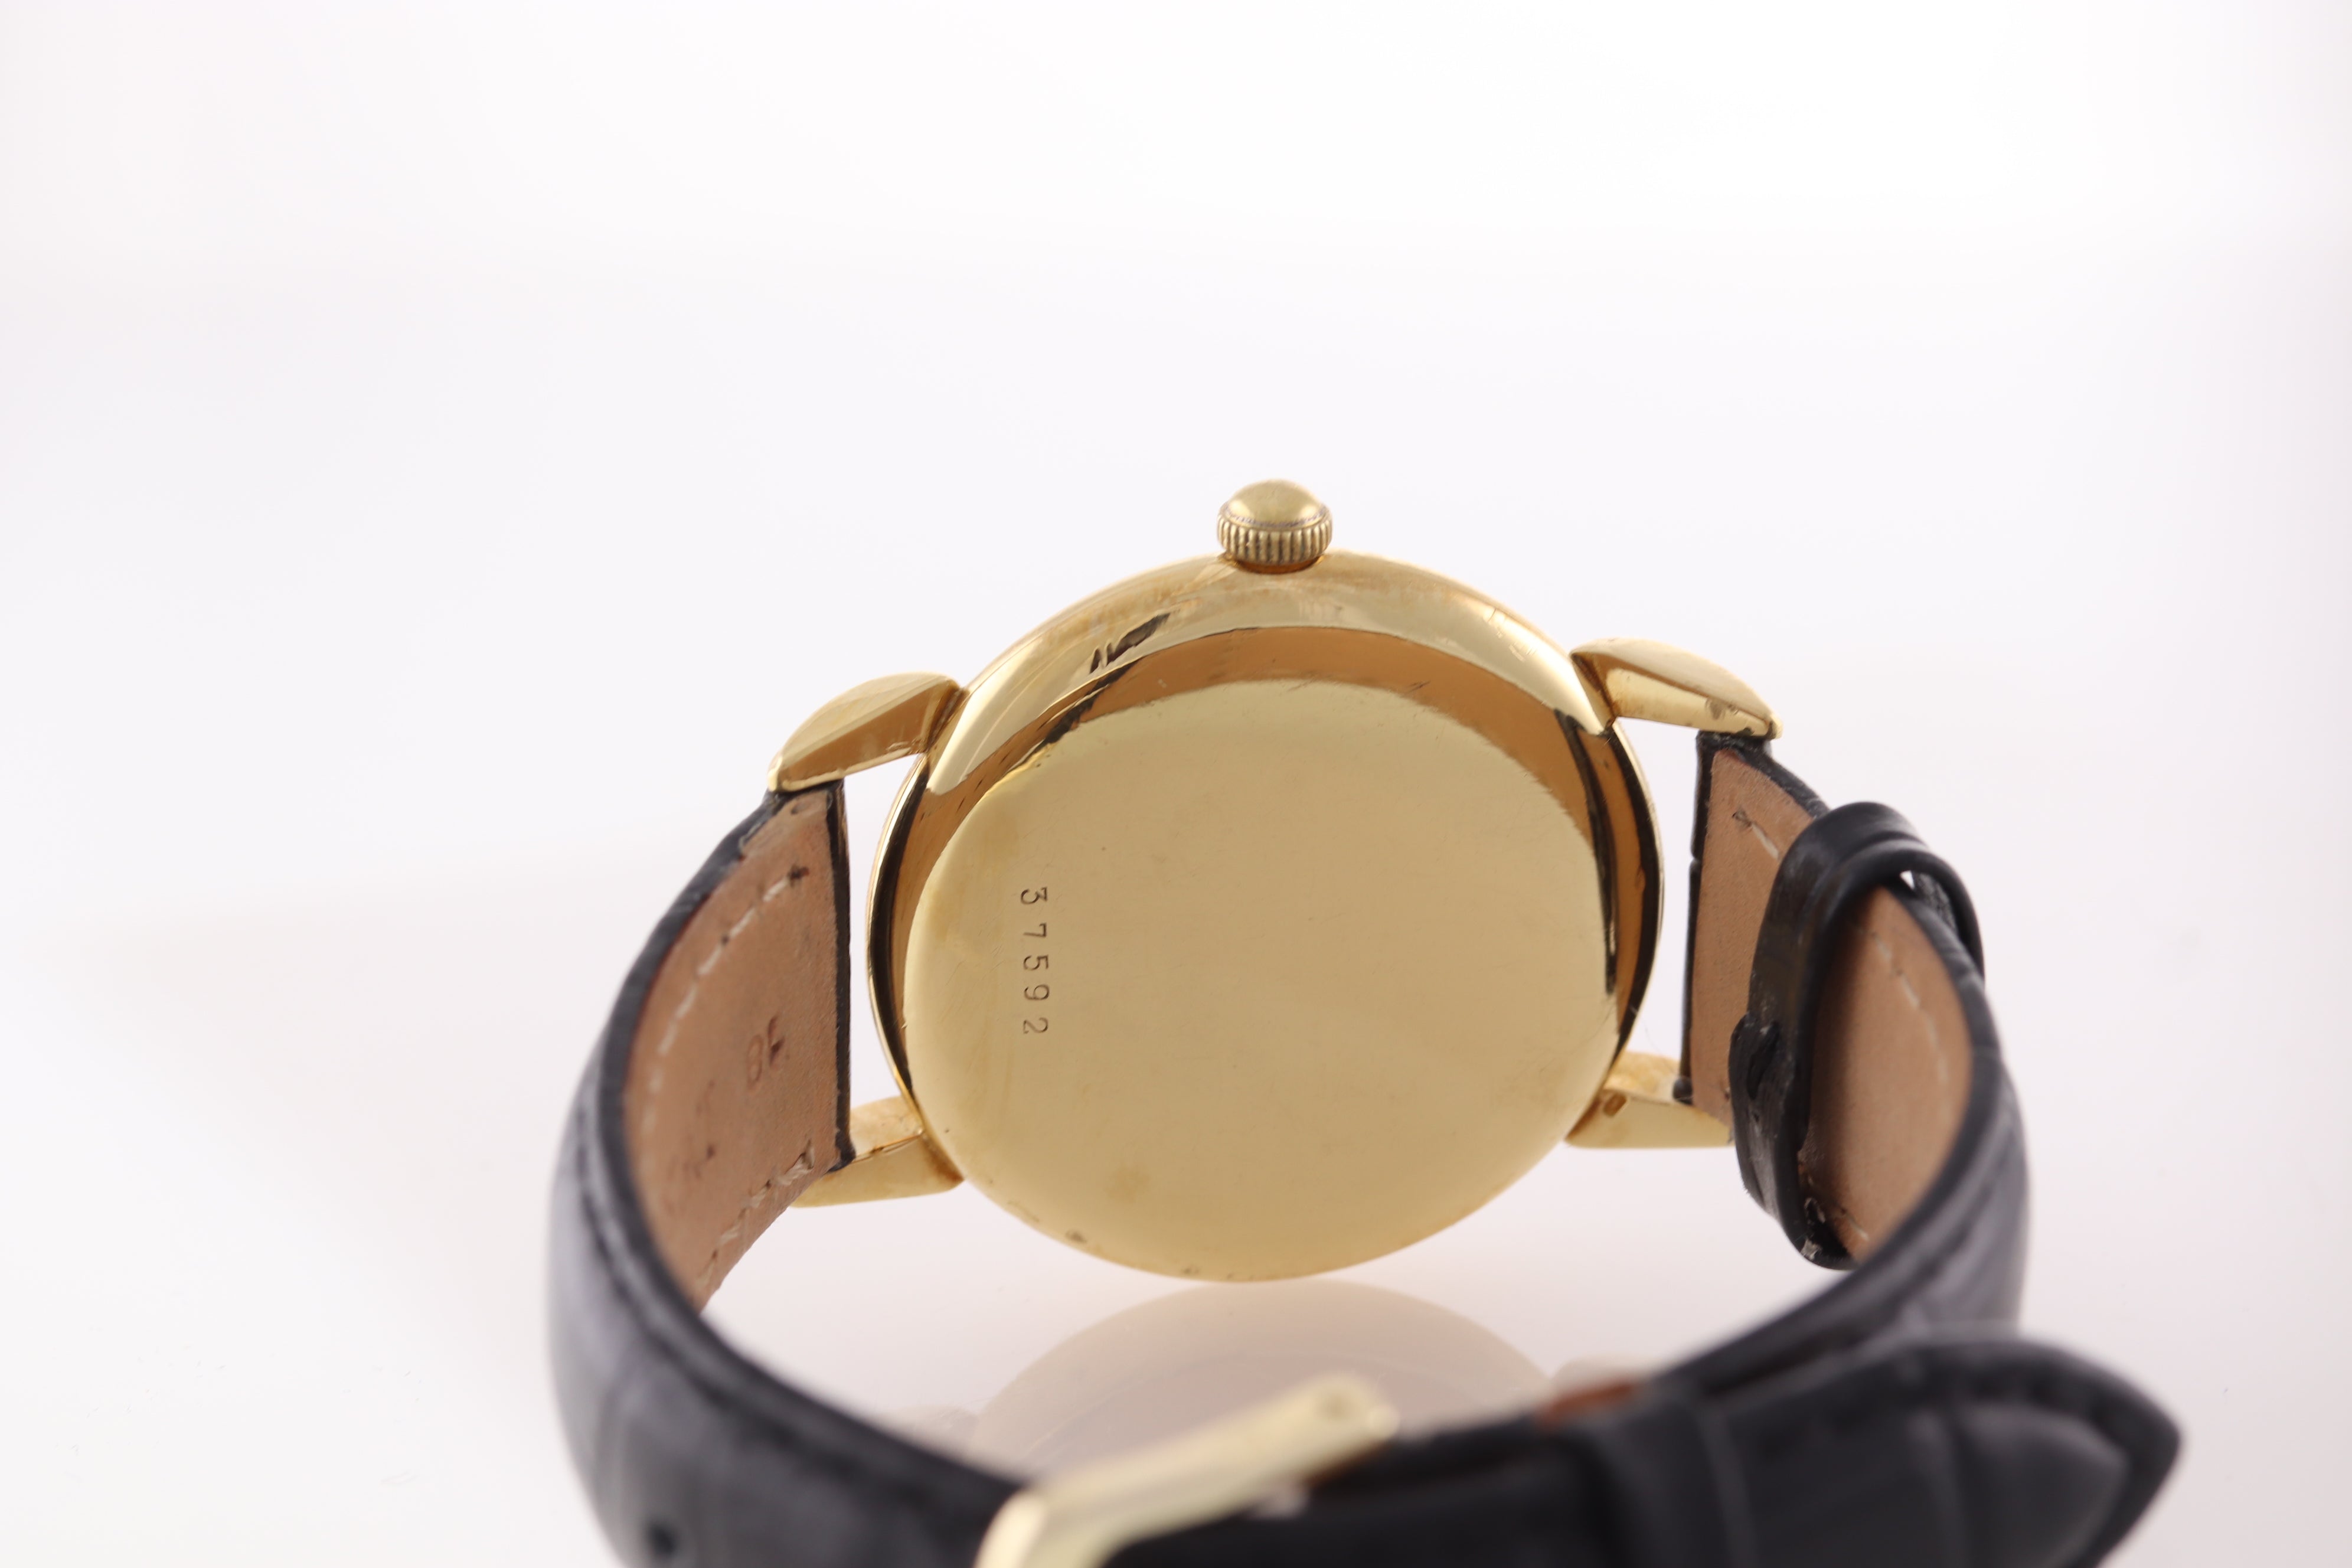 Vintage Glycine 18k Yellow Gold 34mm Manual Wind Silver Arabic Stick Watch A9